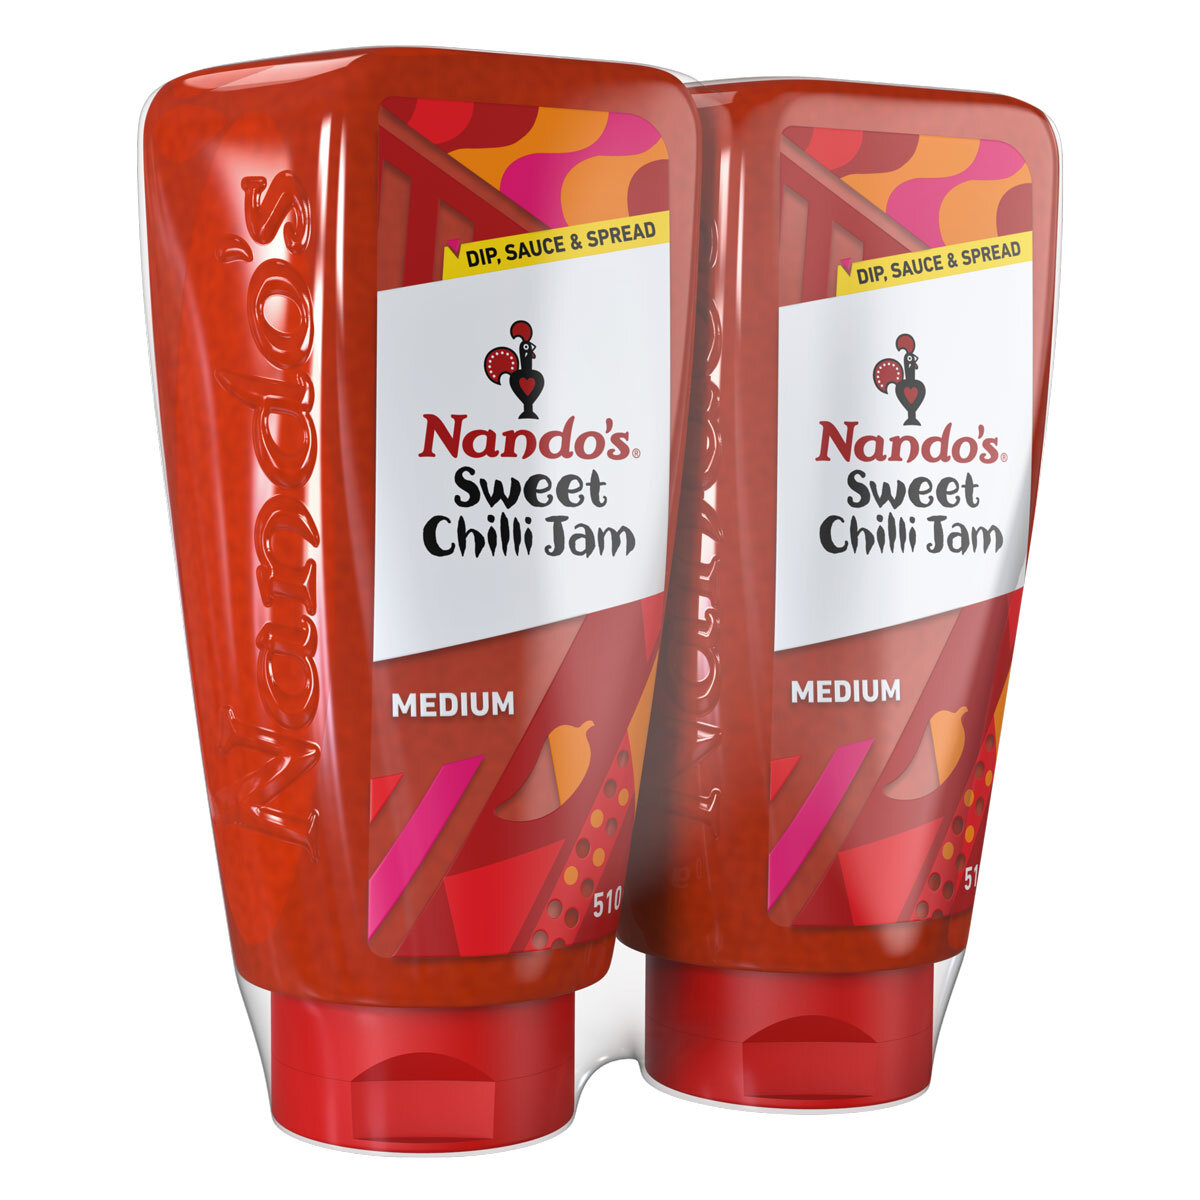 2 pack of nandos sauce